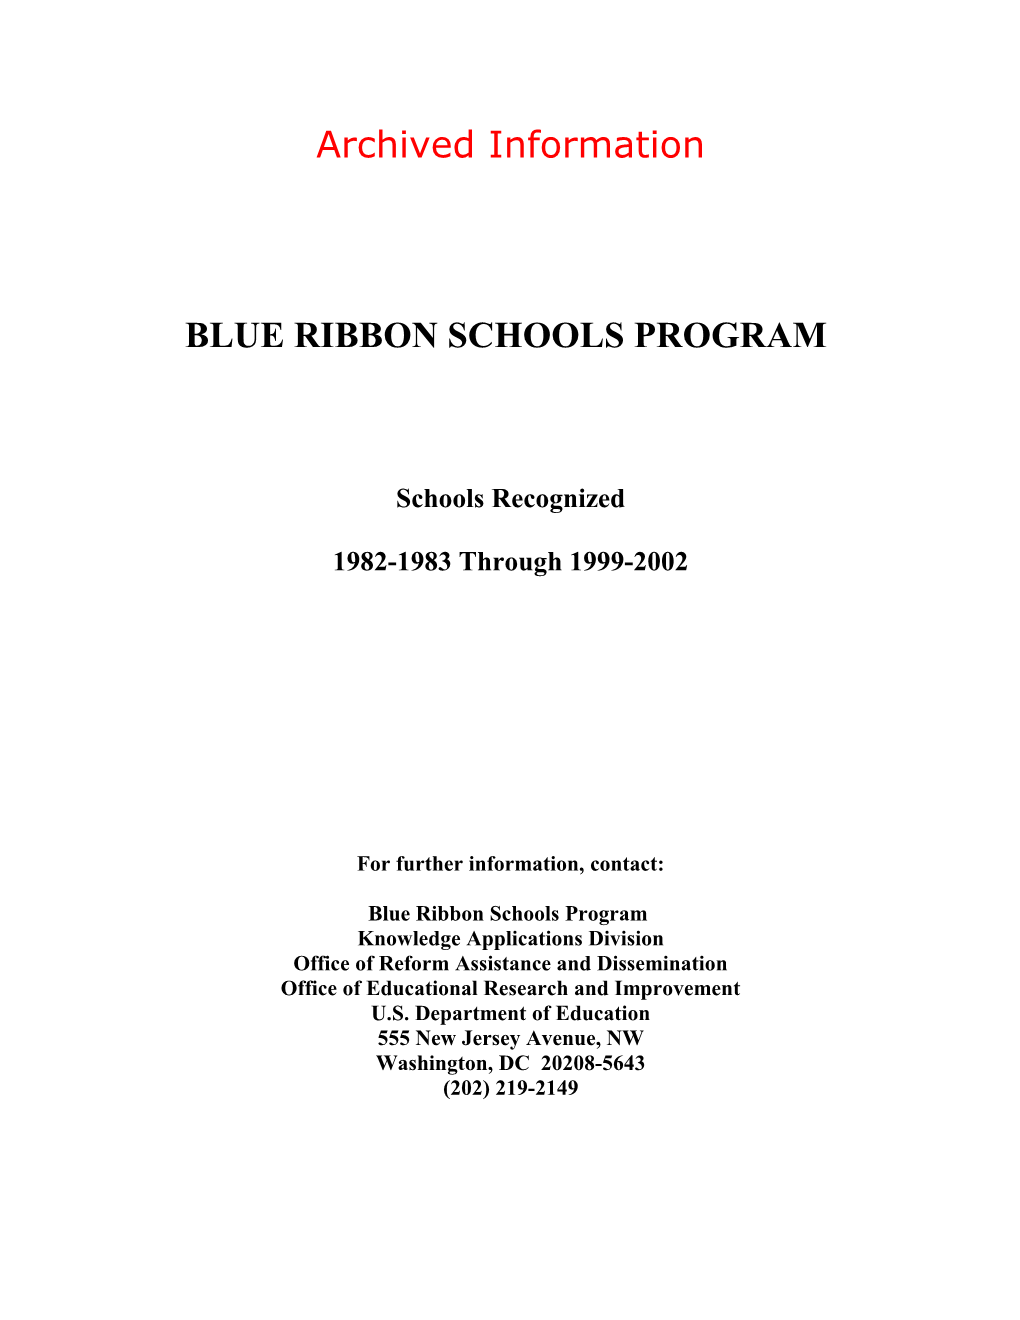 Archived: Blue Ribbon Schools Program, Schools Recognized 1982-1983 Through 1999-2002 (Msword)